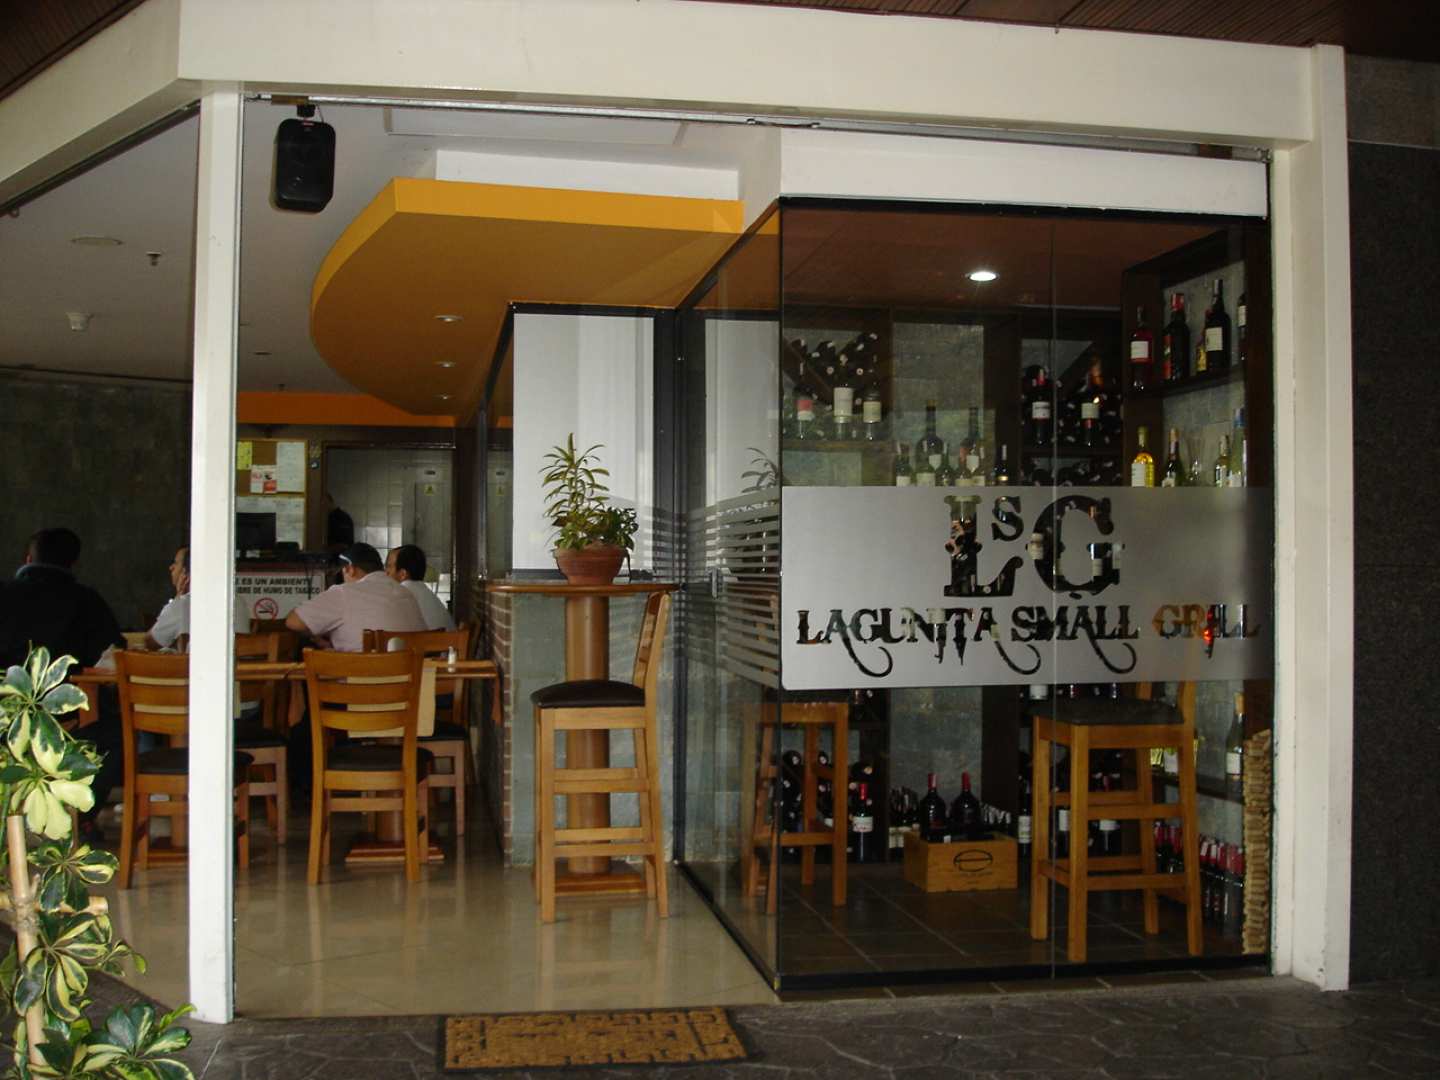 Lagunita Small Grill